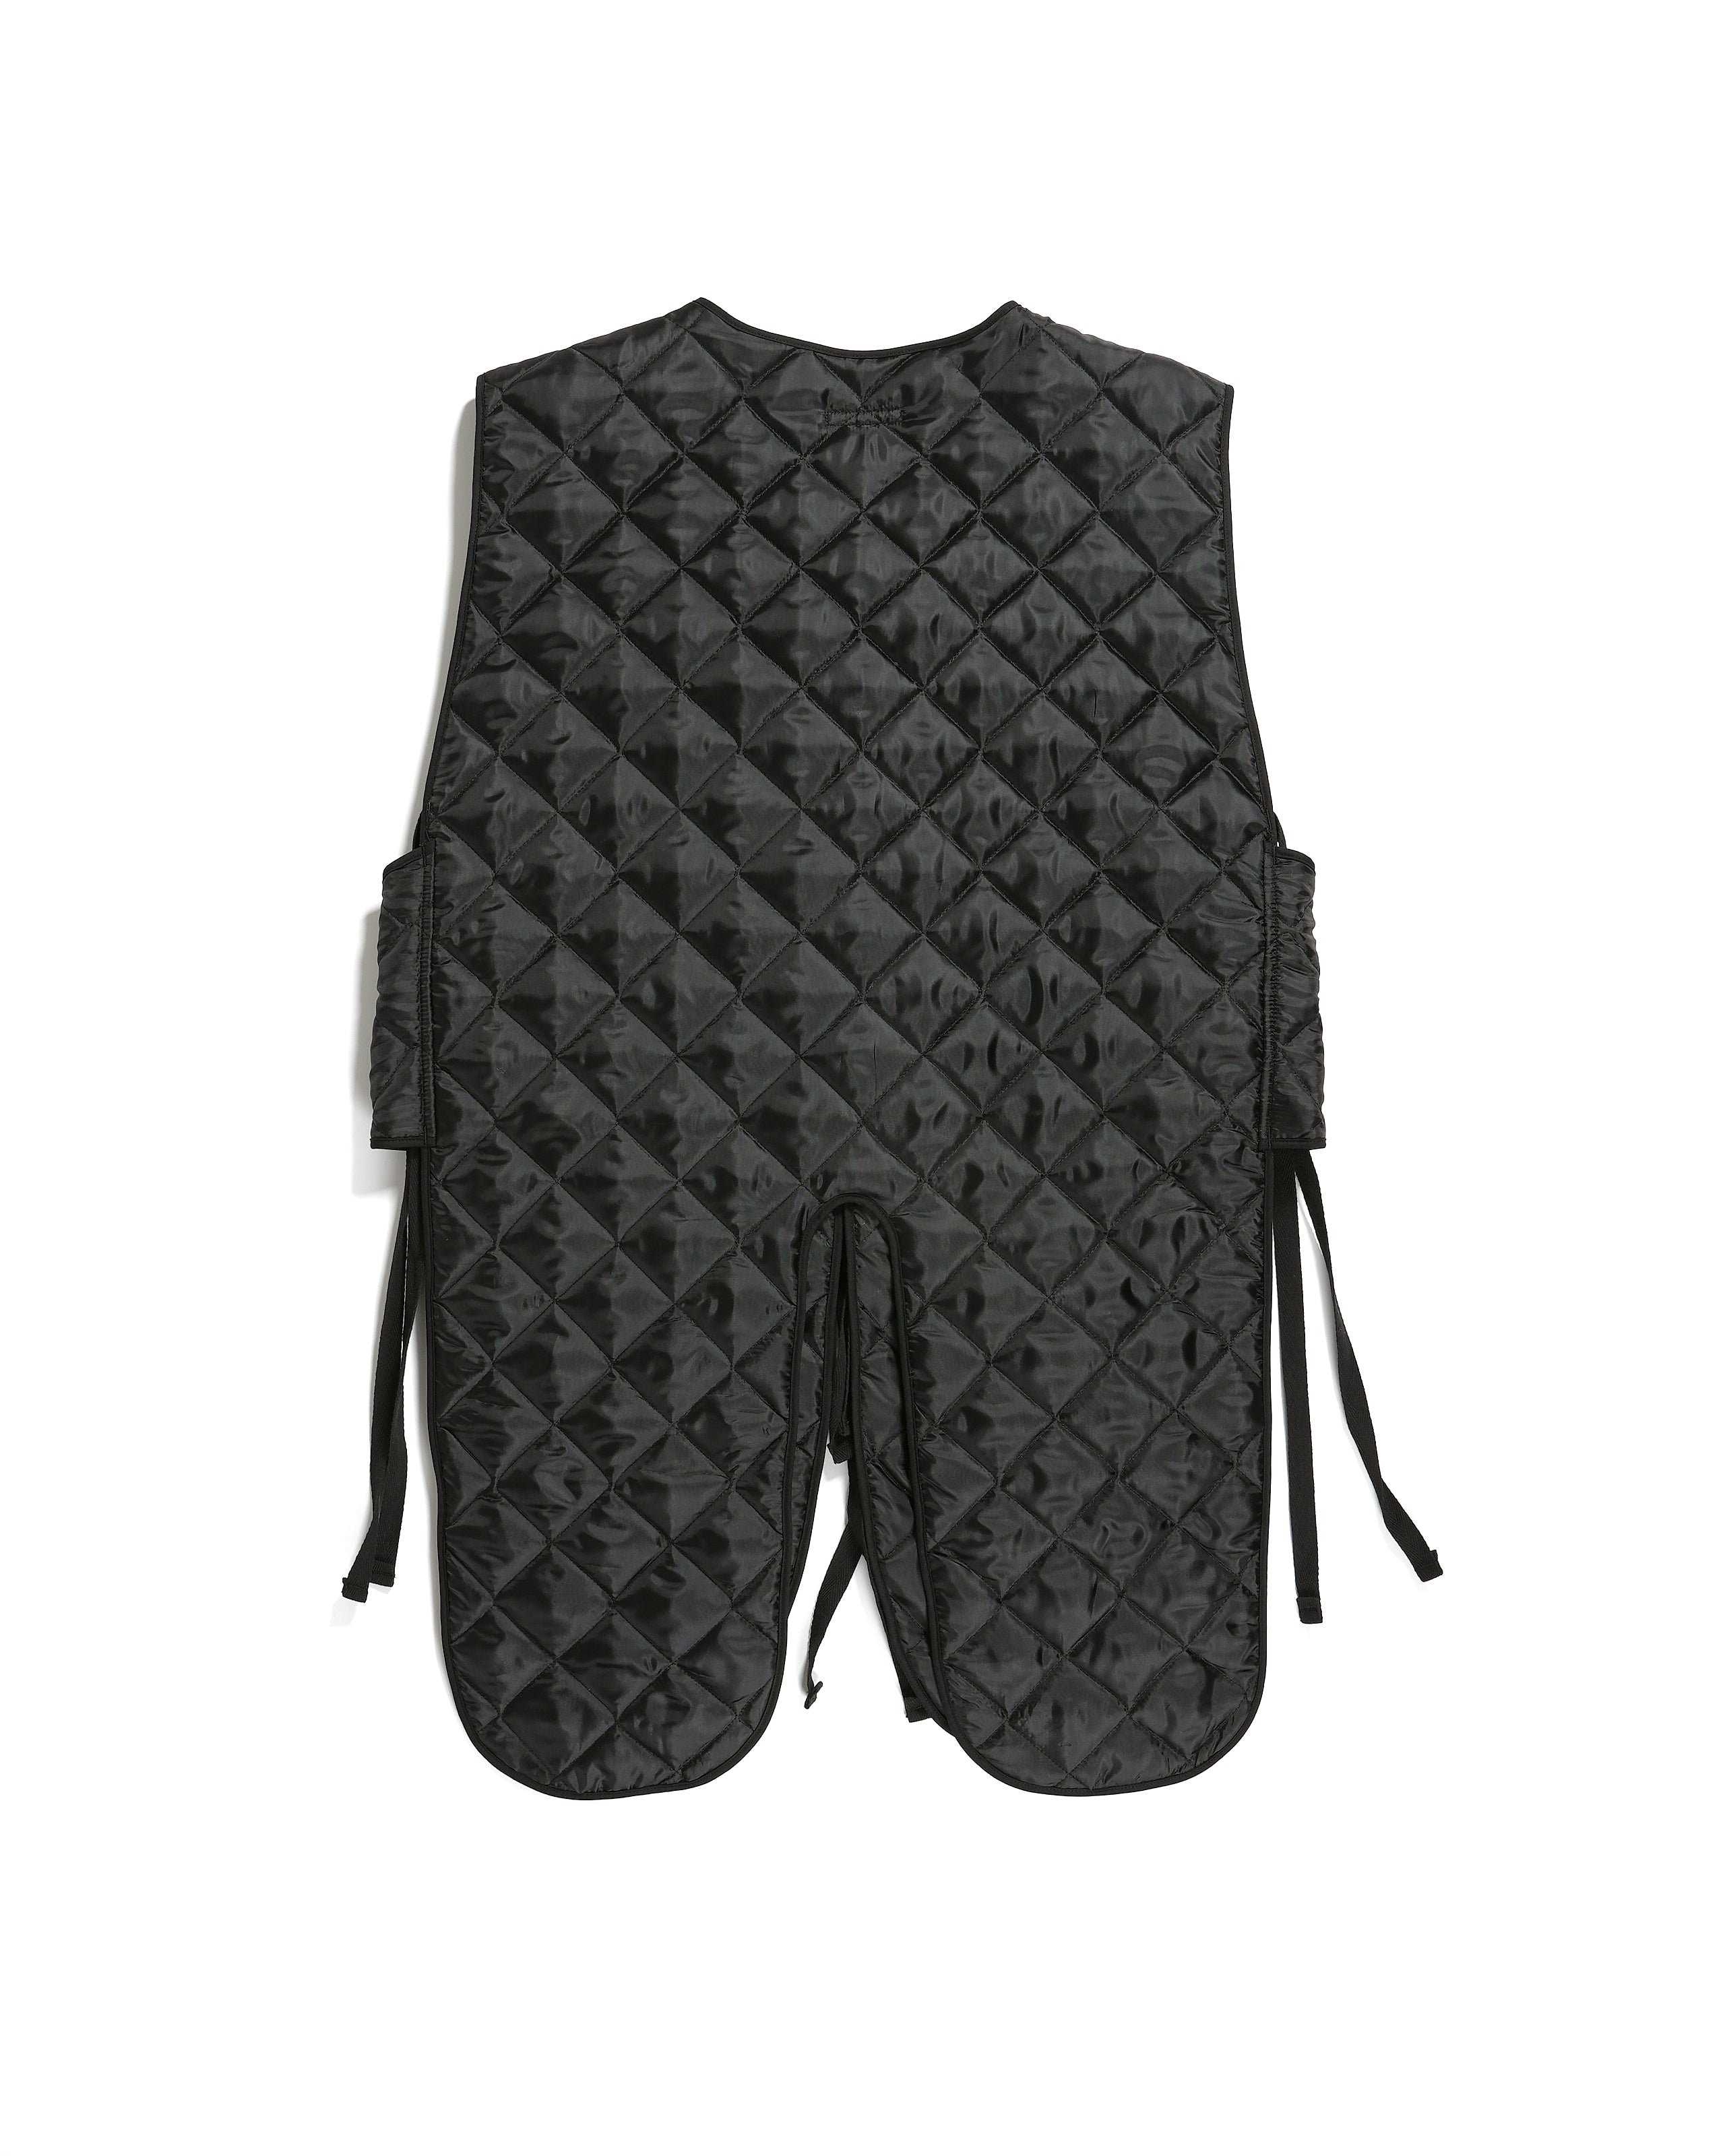 Liner Vest - Black Diamond Quilted Polyester